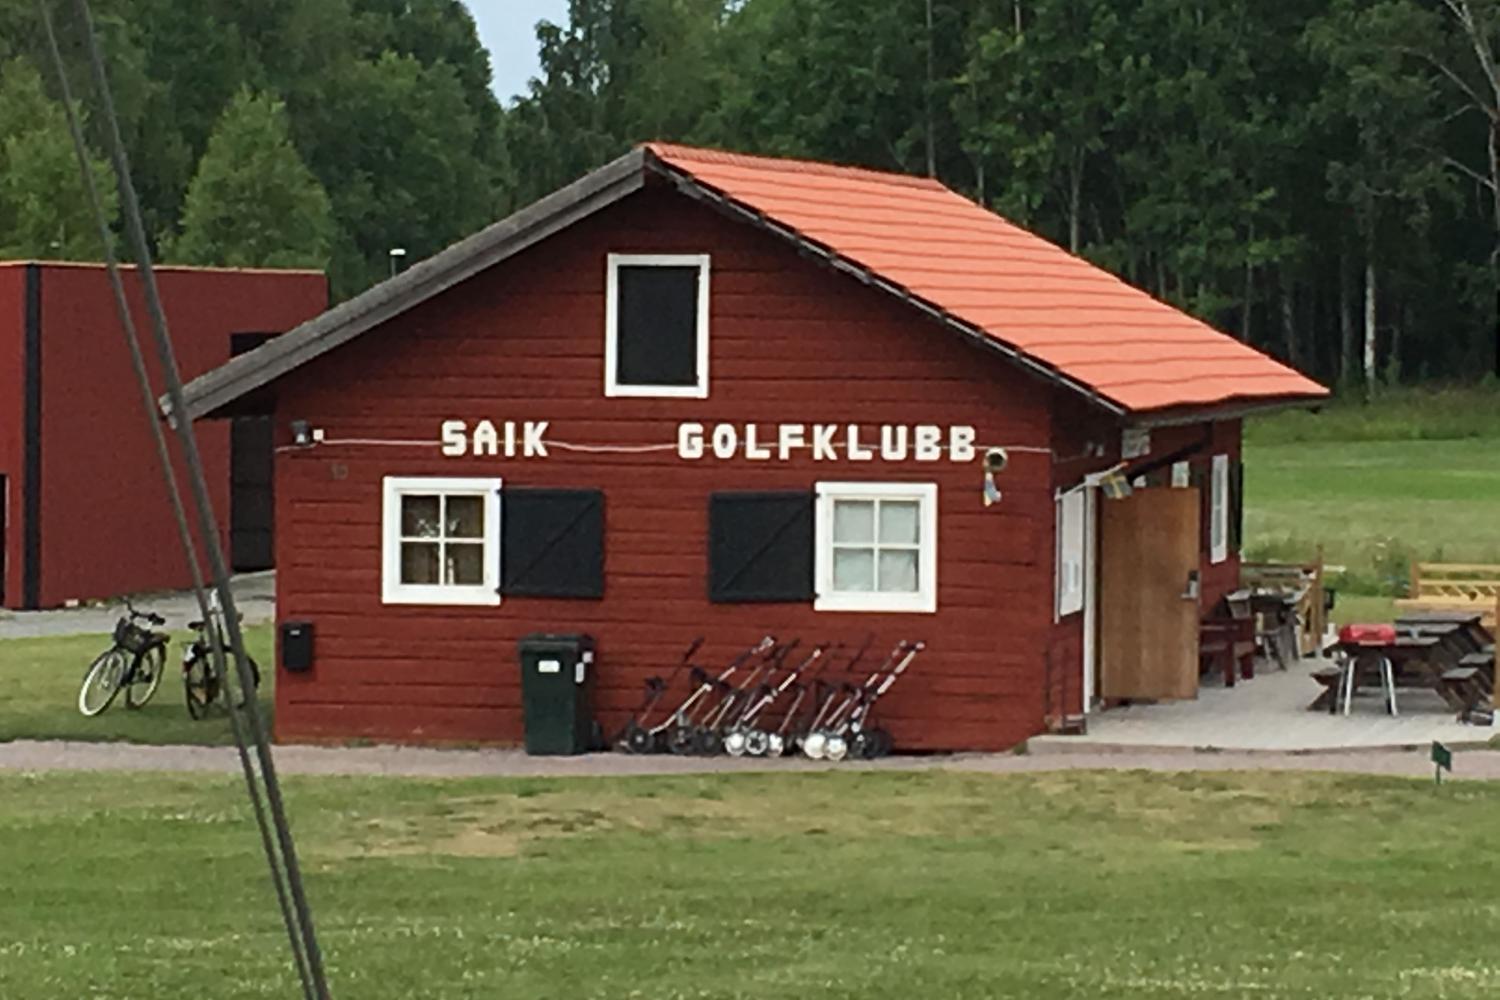 Sandviken's Golf Club